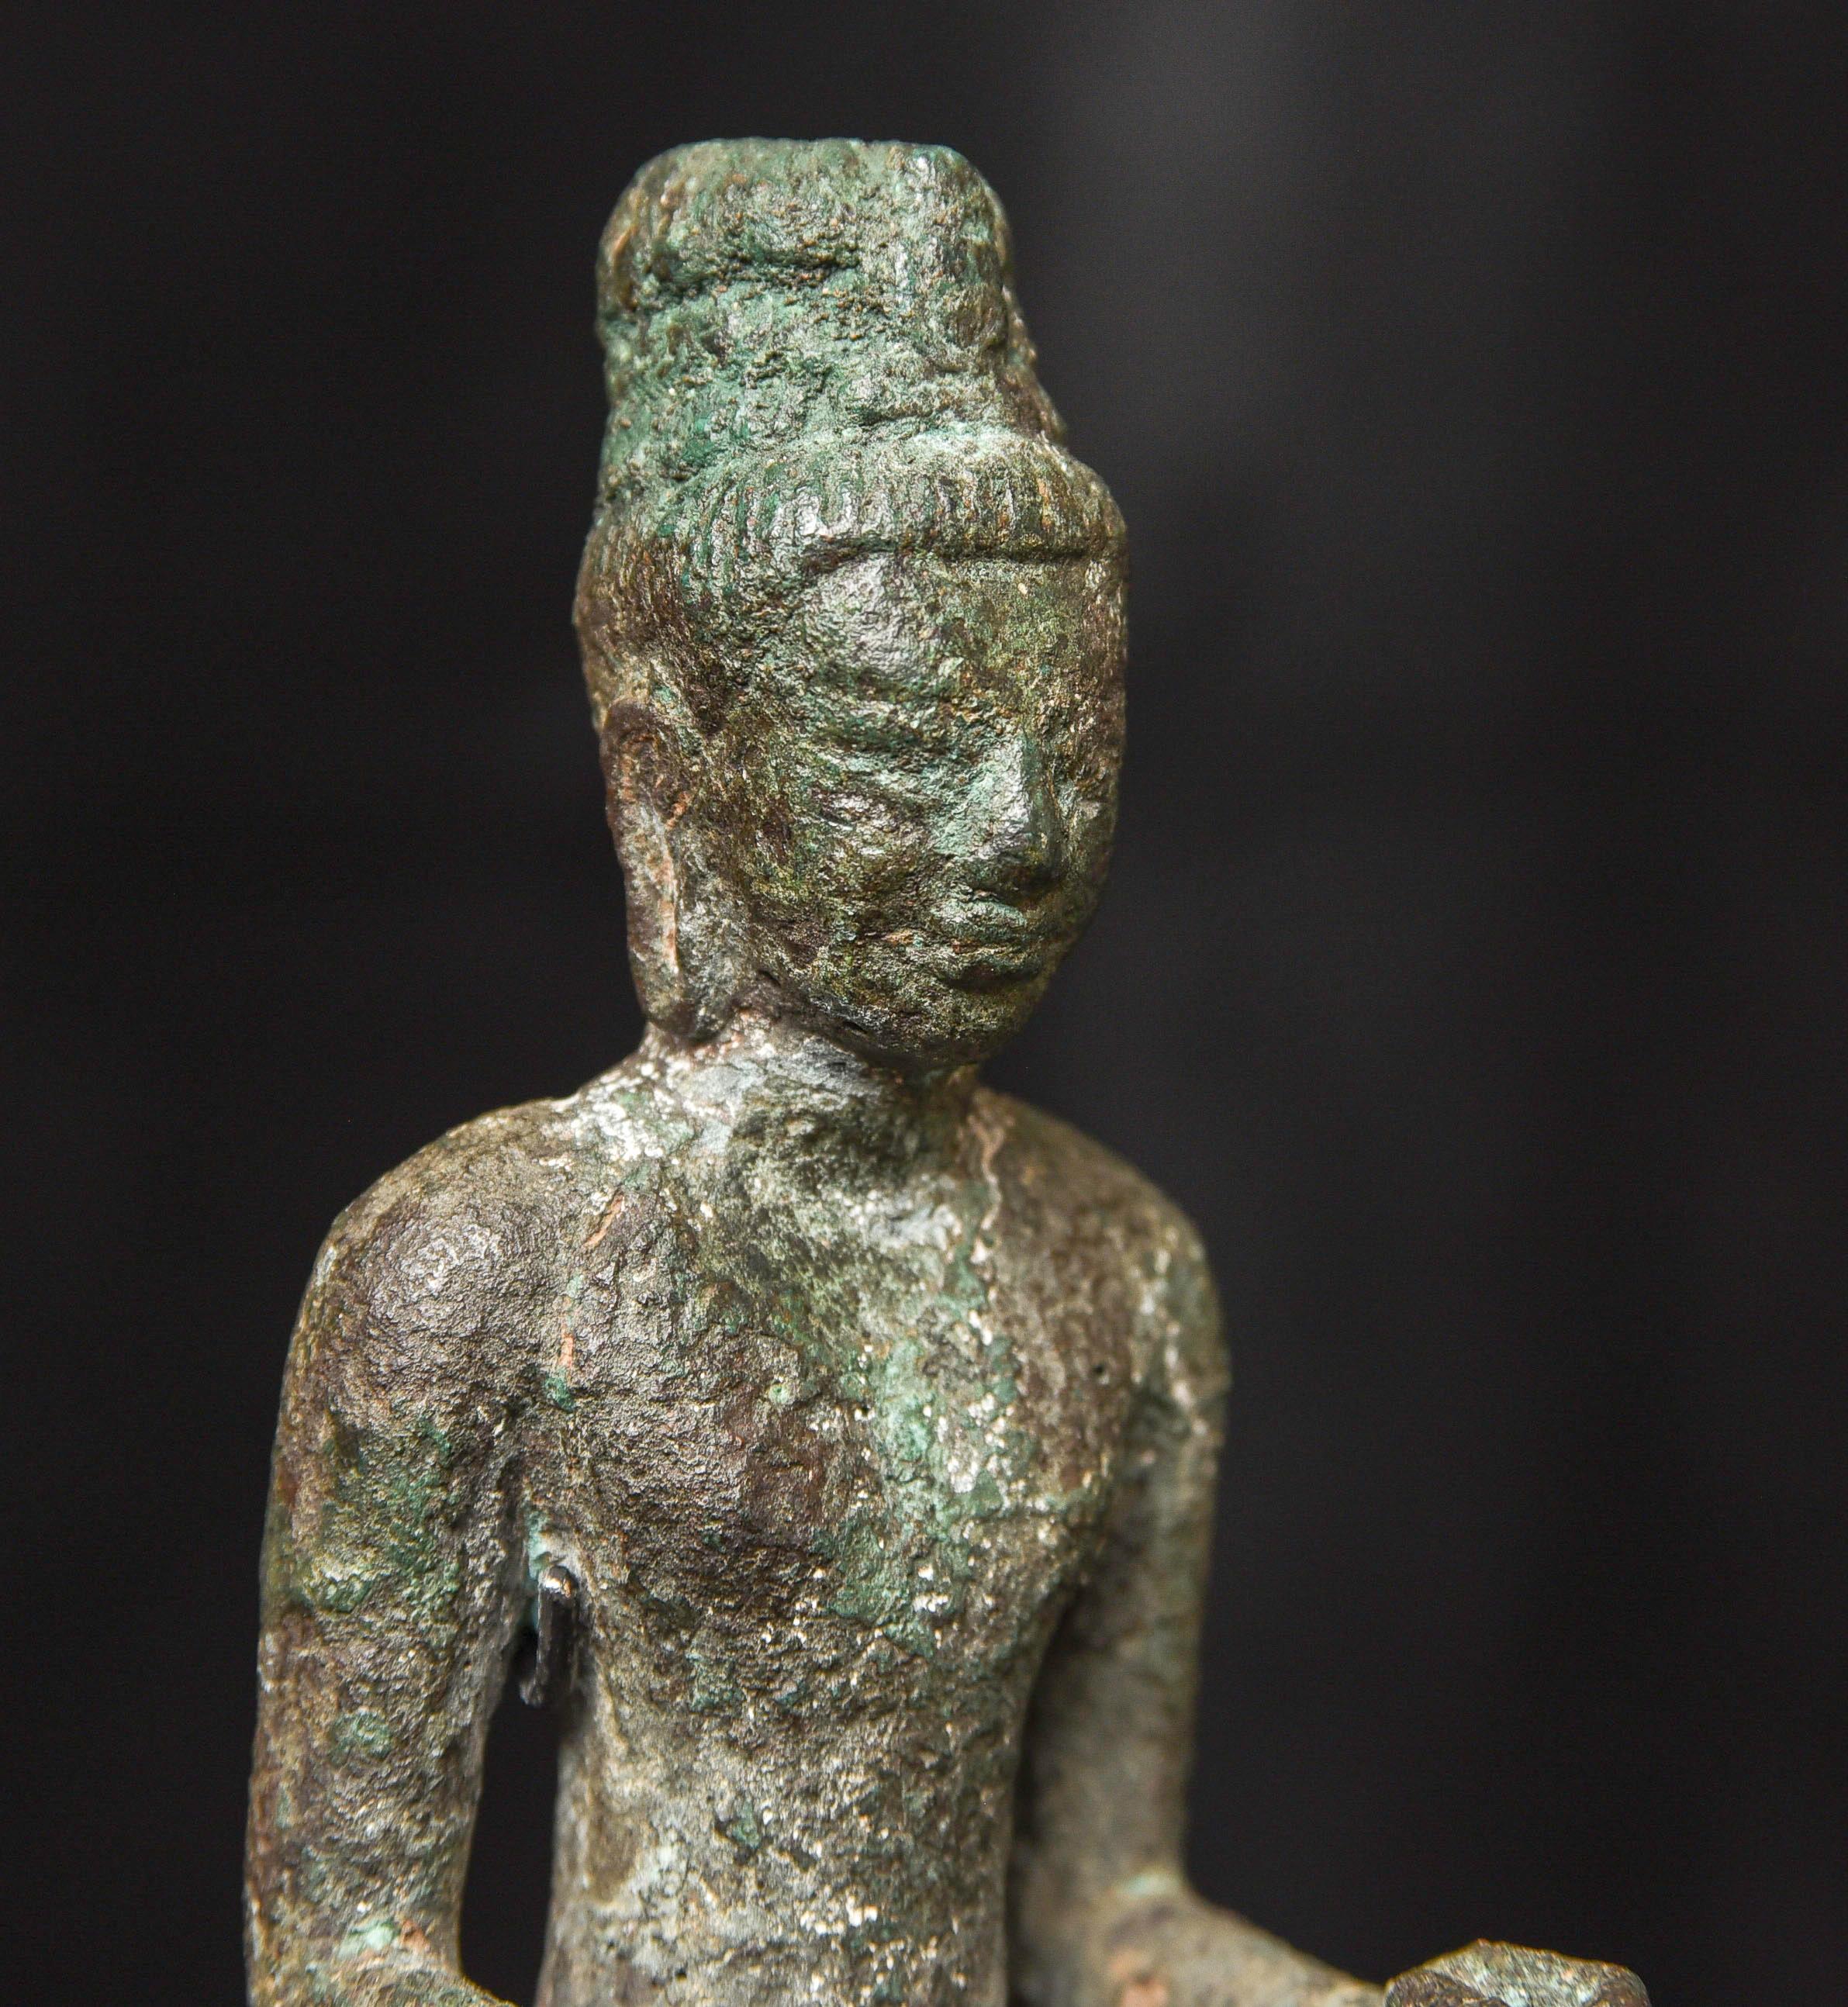 7th/9thC Solid-Cast Bronze Prakhon Chai Buddha or Bodhisattva - 9688 For Sale 8